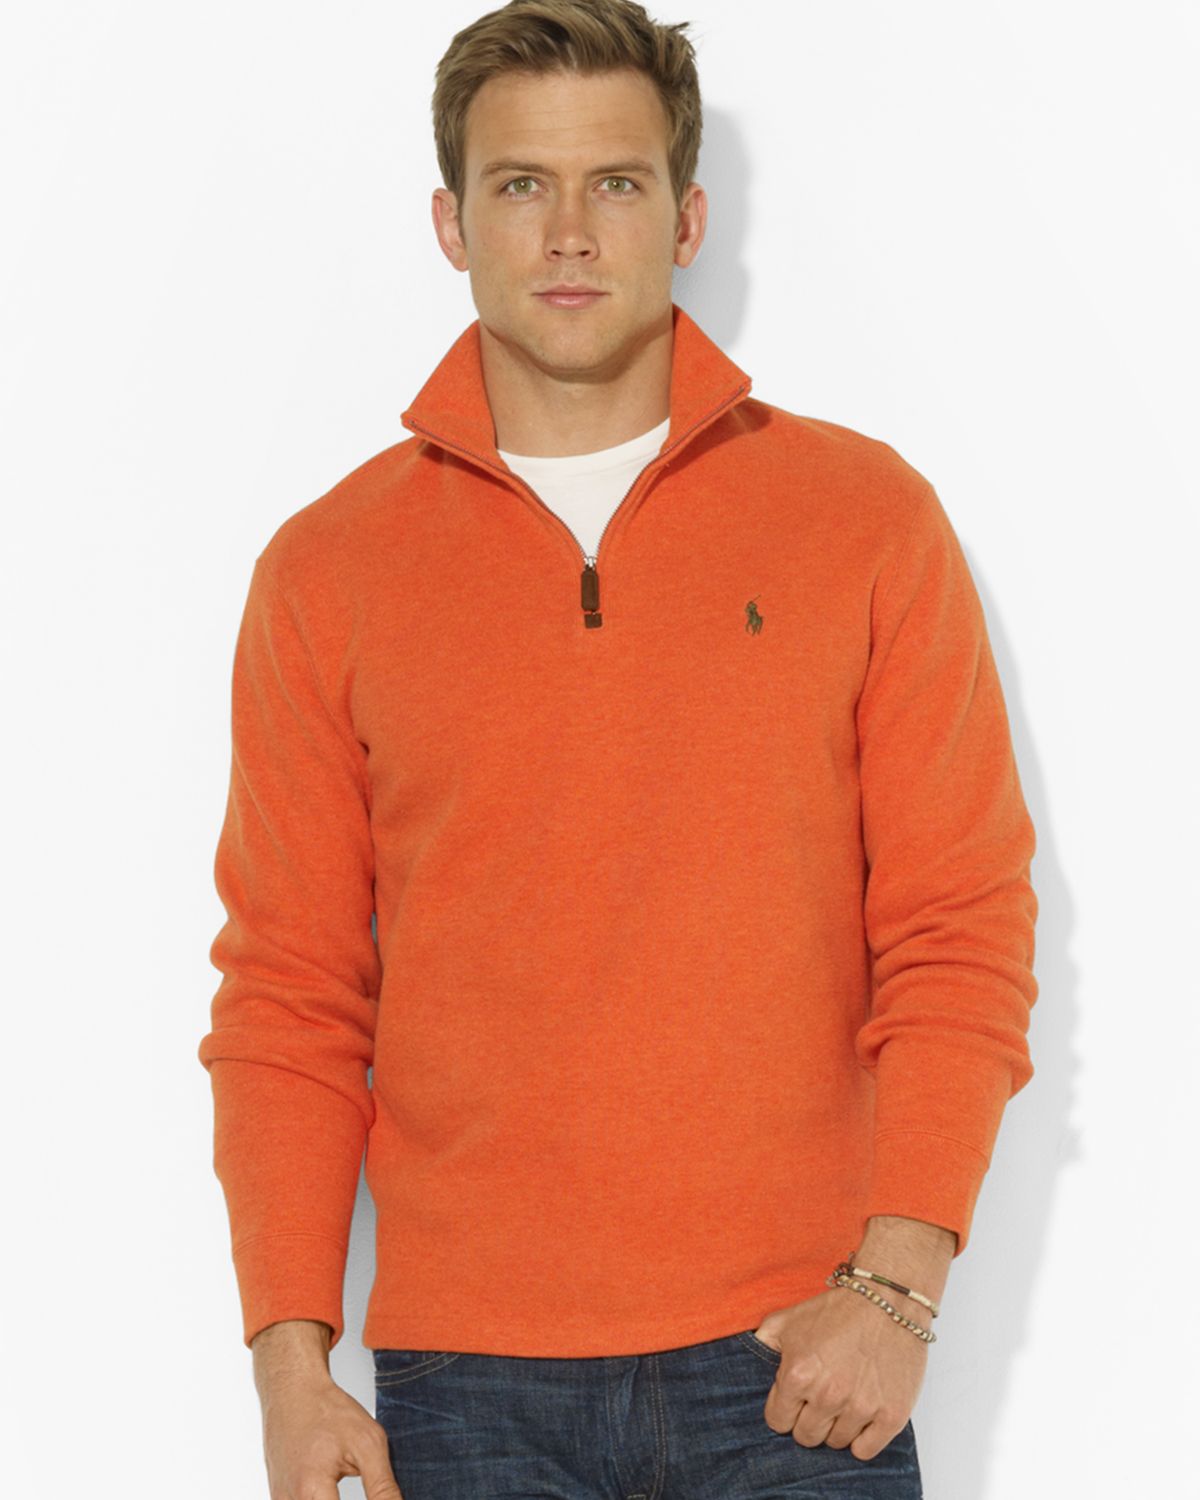 polo ralph lauren orange sweater